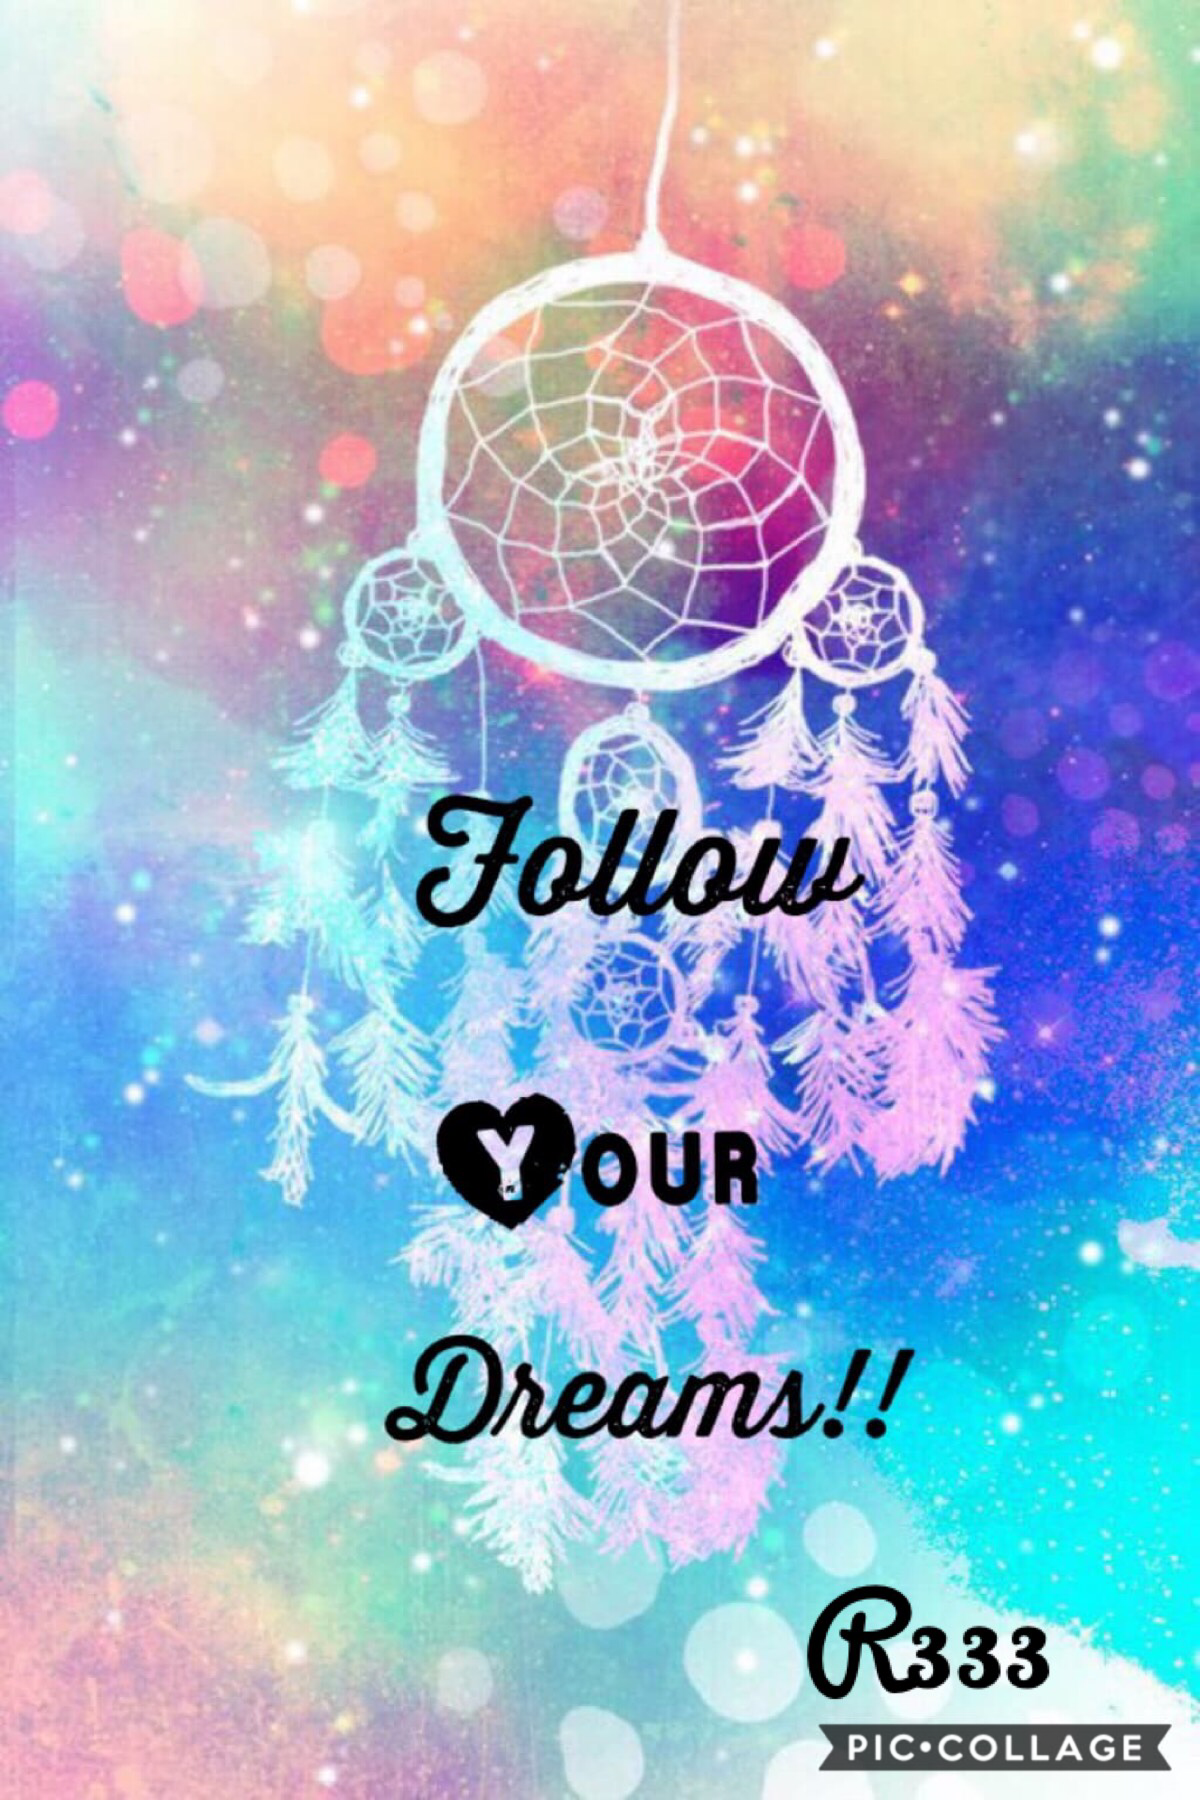 Follow your dreams!!